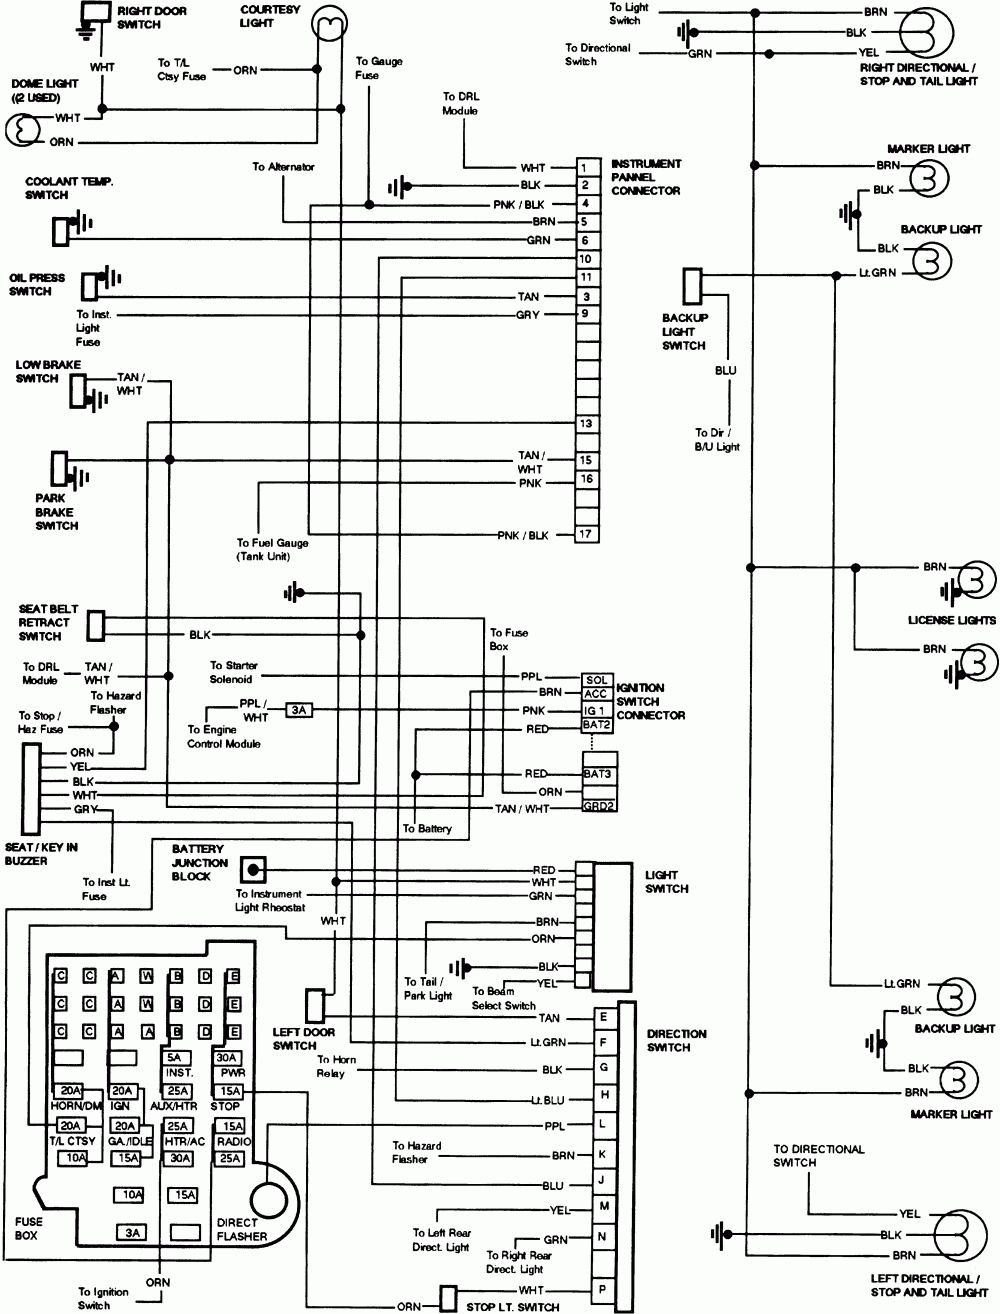 Diagram 1977 Chevy Truck Tail Light Wiring Diagram Full Version Hd Quality Wiring Diagram Mediagrams Belen Rodriguez It